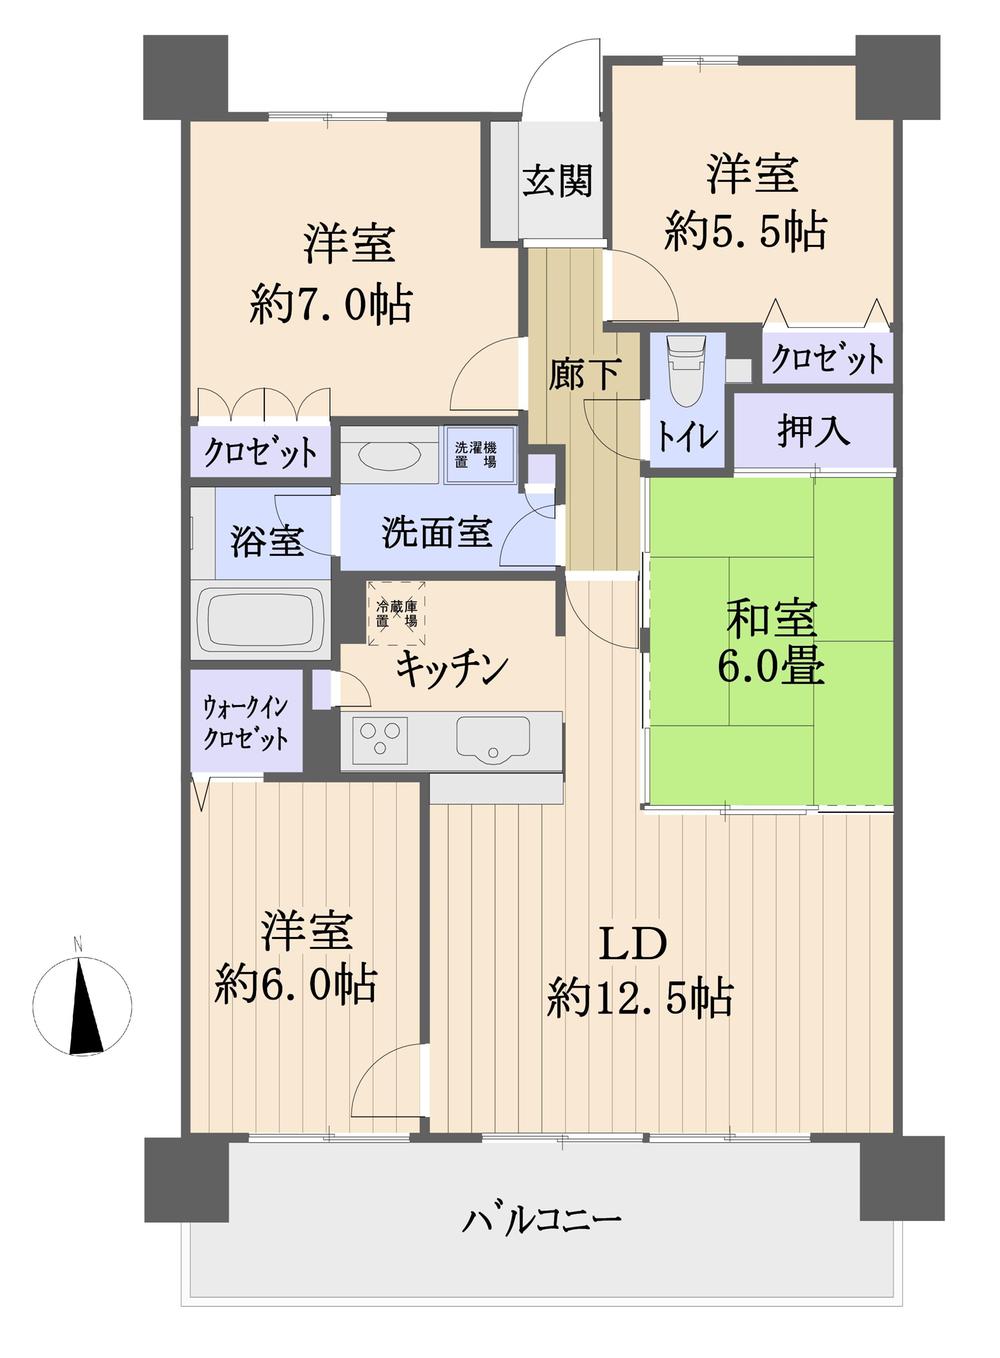 Floor plan. 4LDK, Price 20.5 million yen, Occupied area 84.86 sq m , Balcony area 13.3 sq m